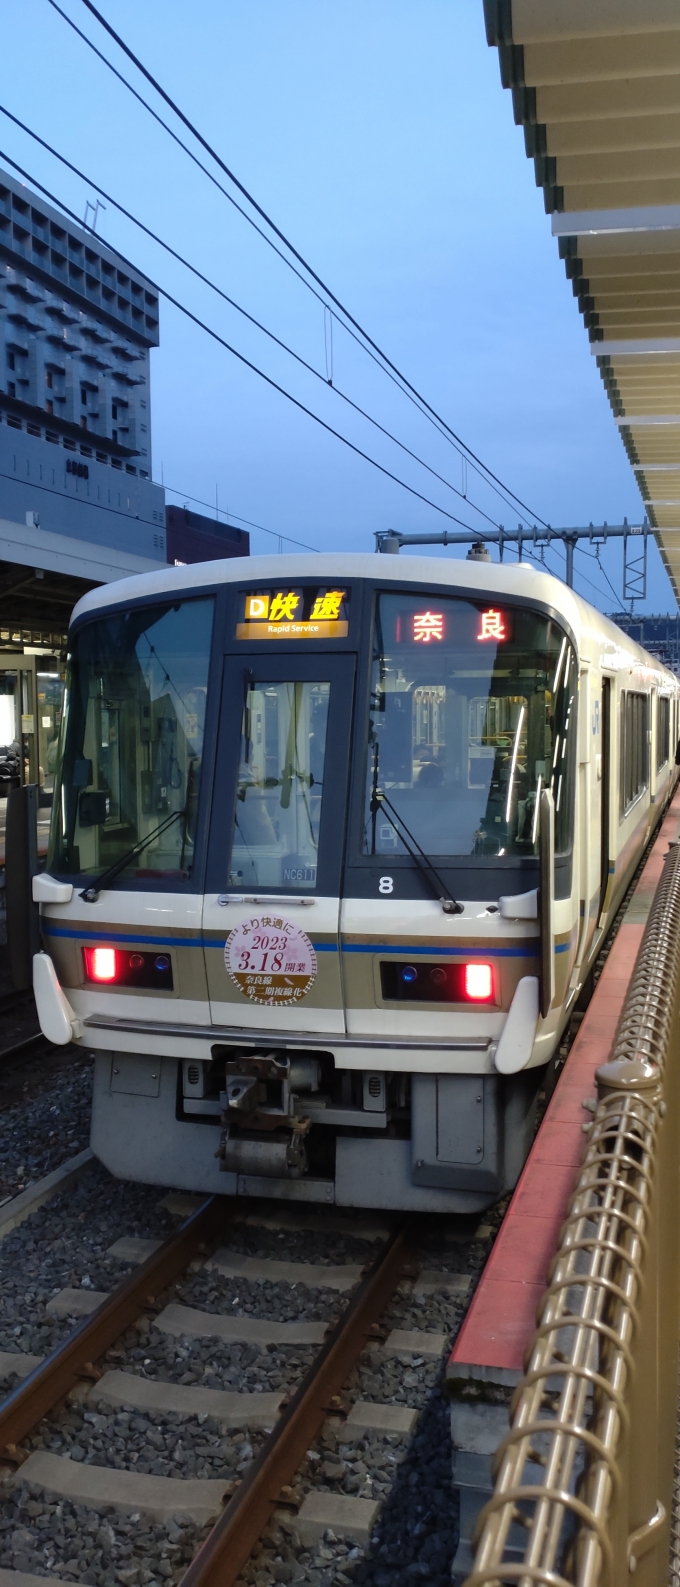 鉄道乗車記録の写真:乗車した列車(外観)(1)          「奈良線第二期複線化記念HM付き」